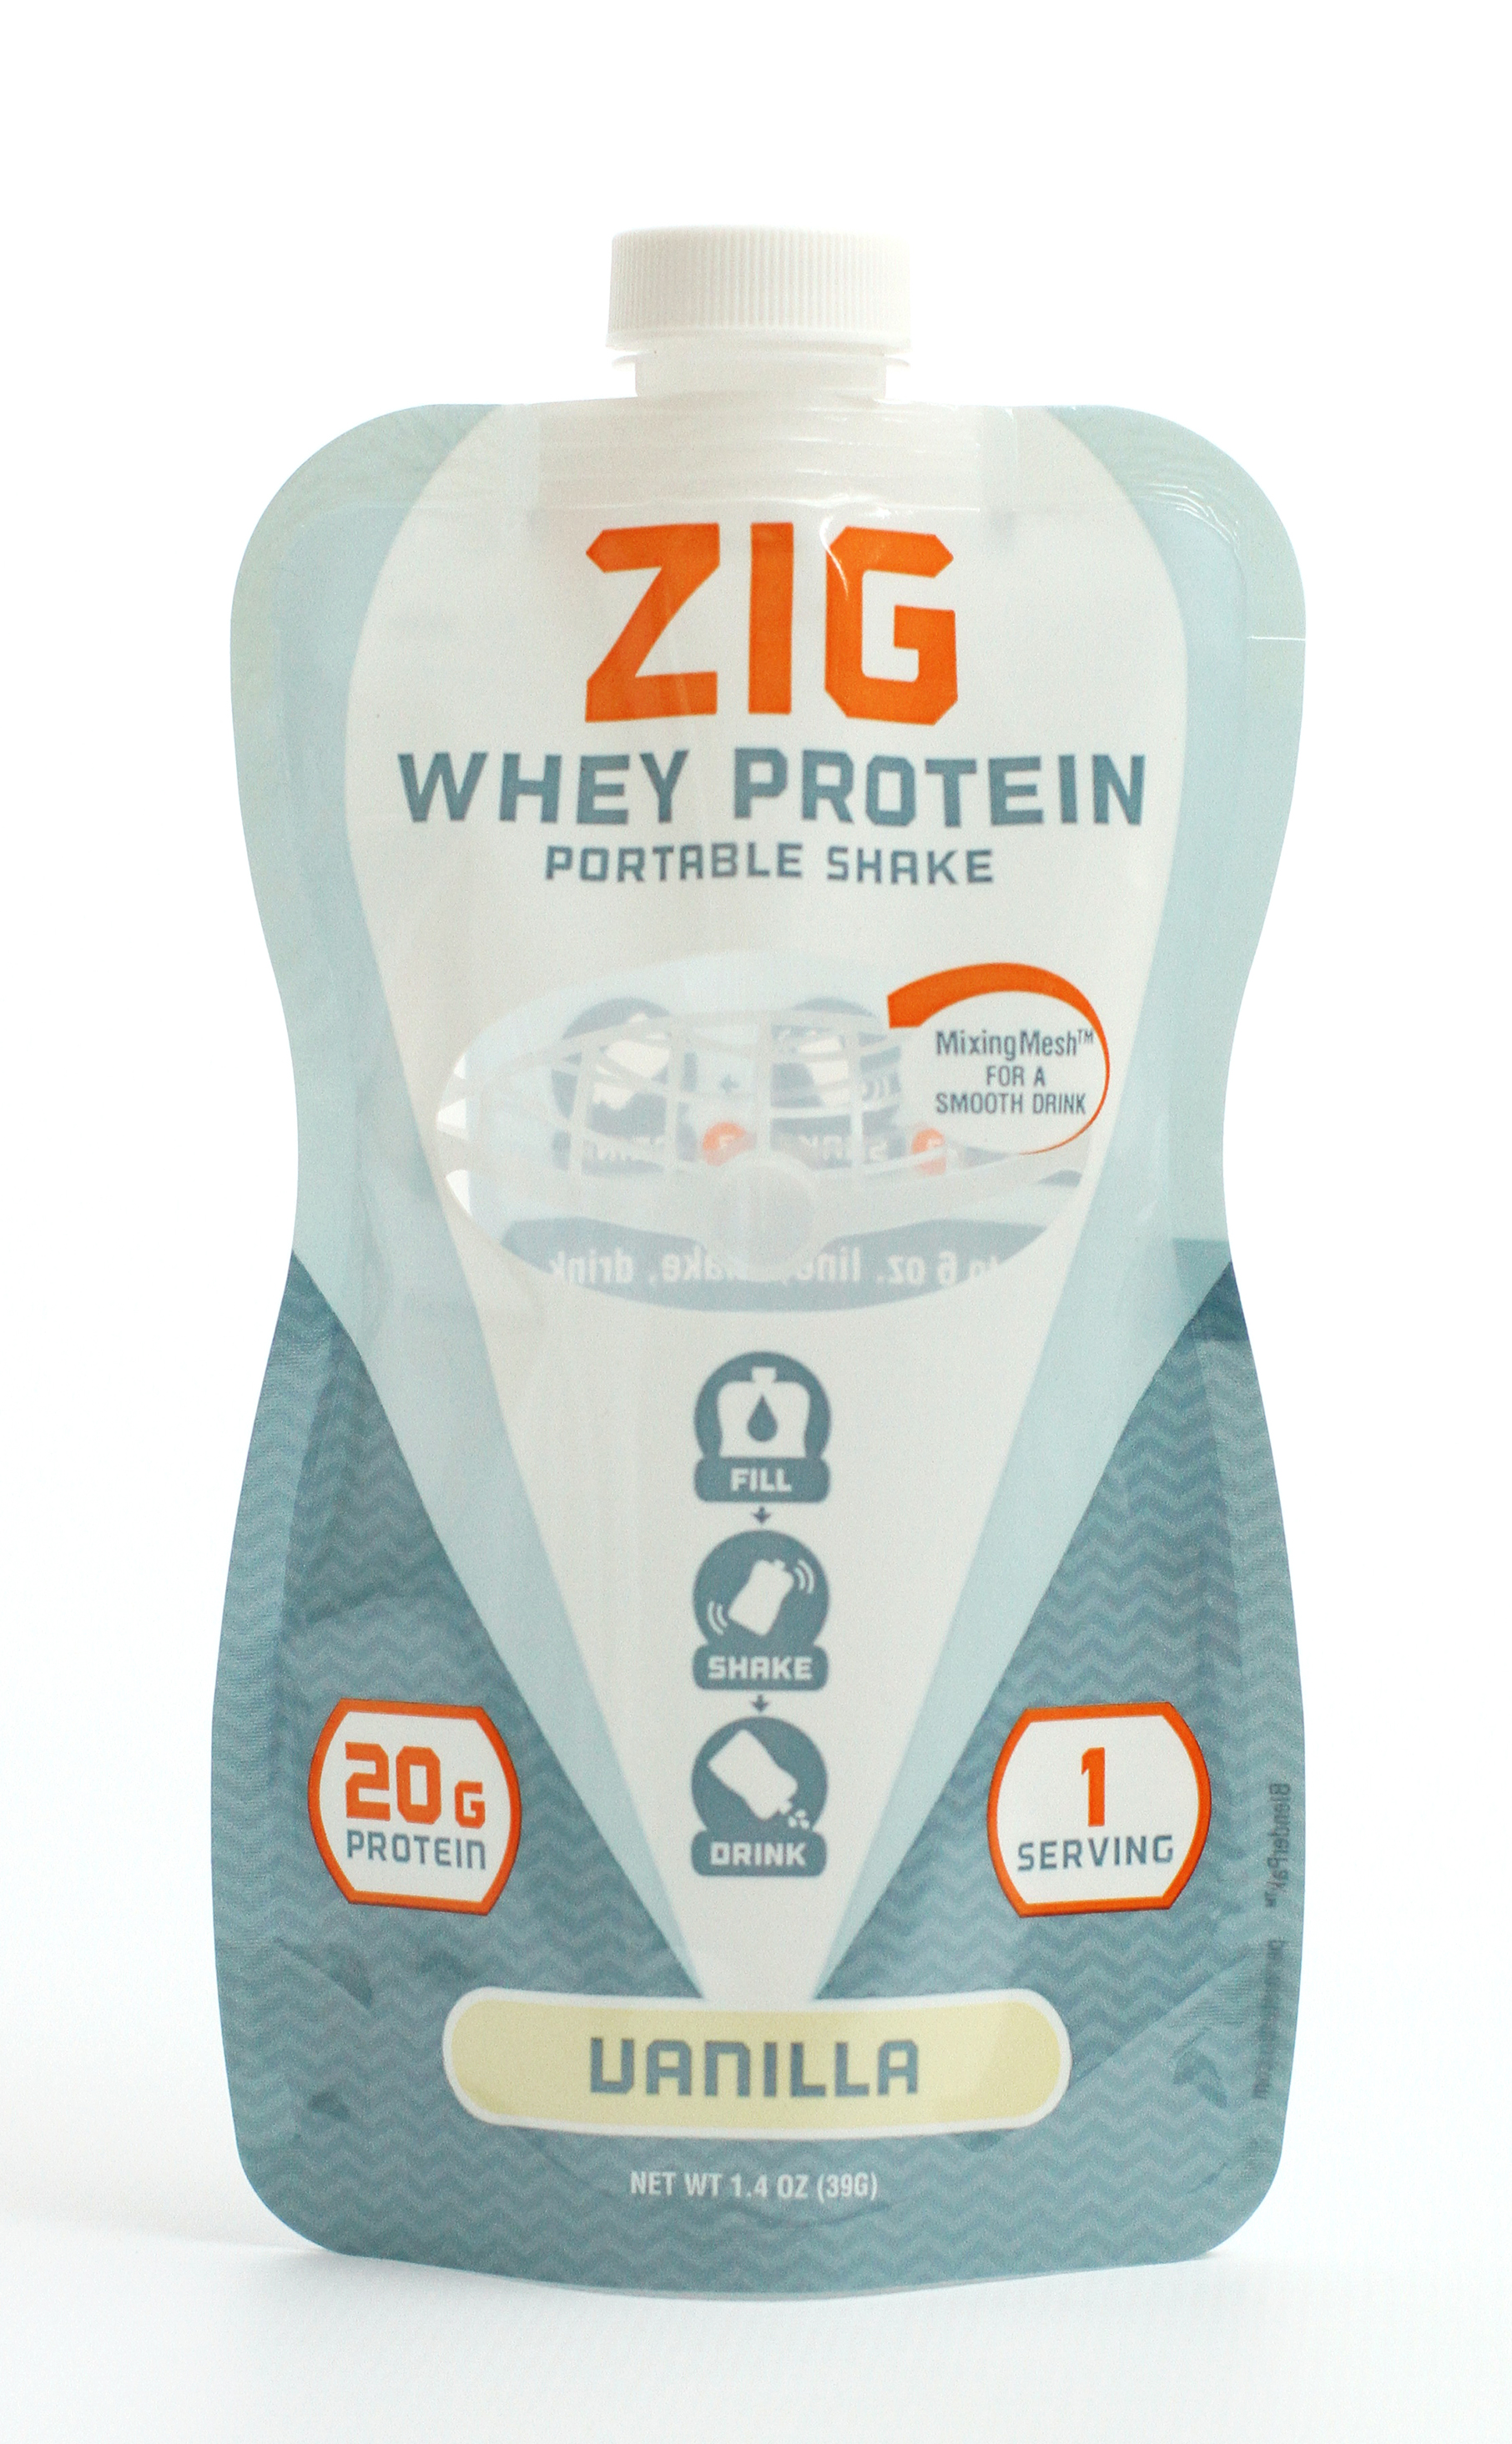 ZIG Vanilla Protein Shake offers 20 grams of premium whey protein per serving.